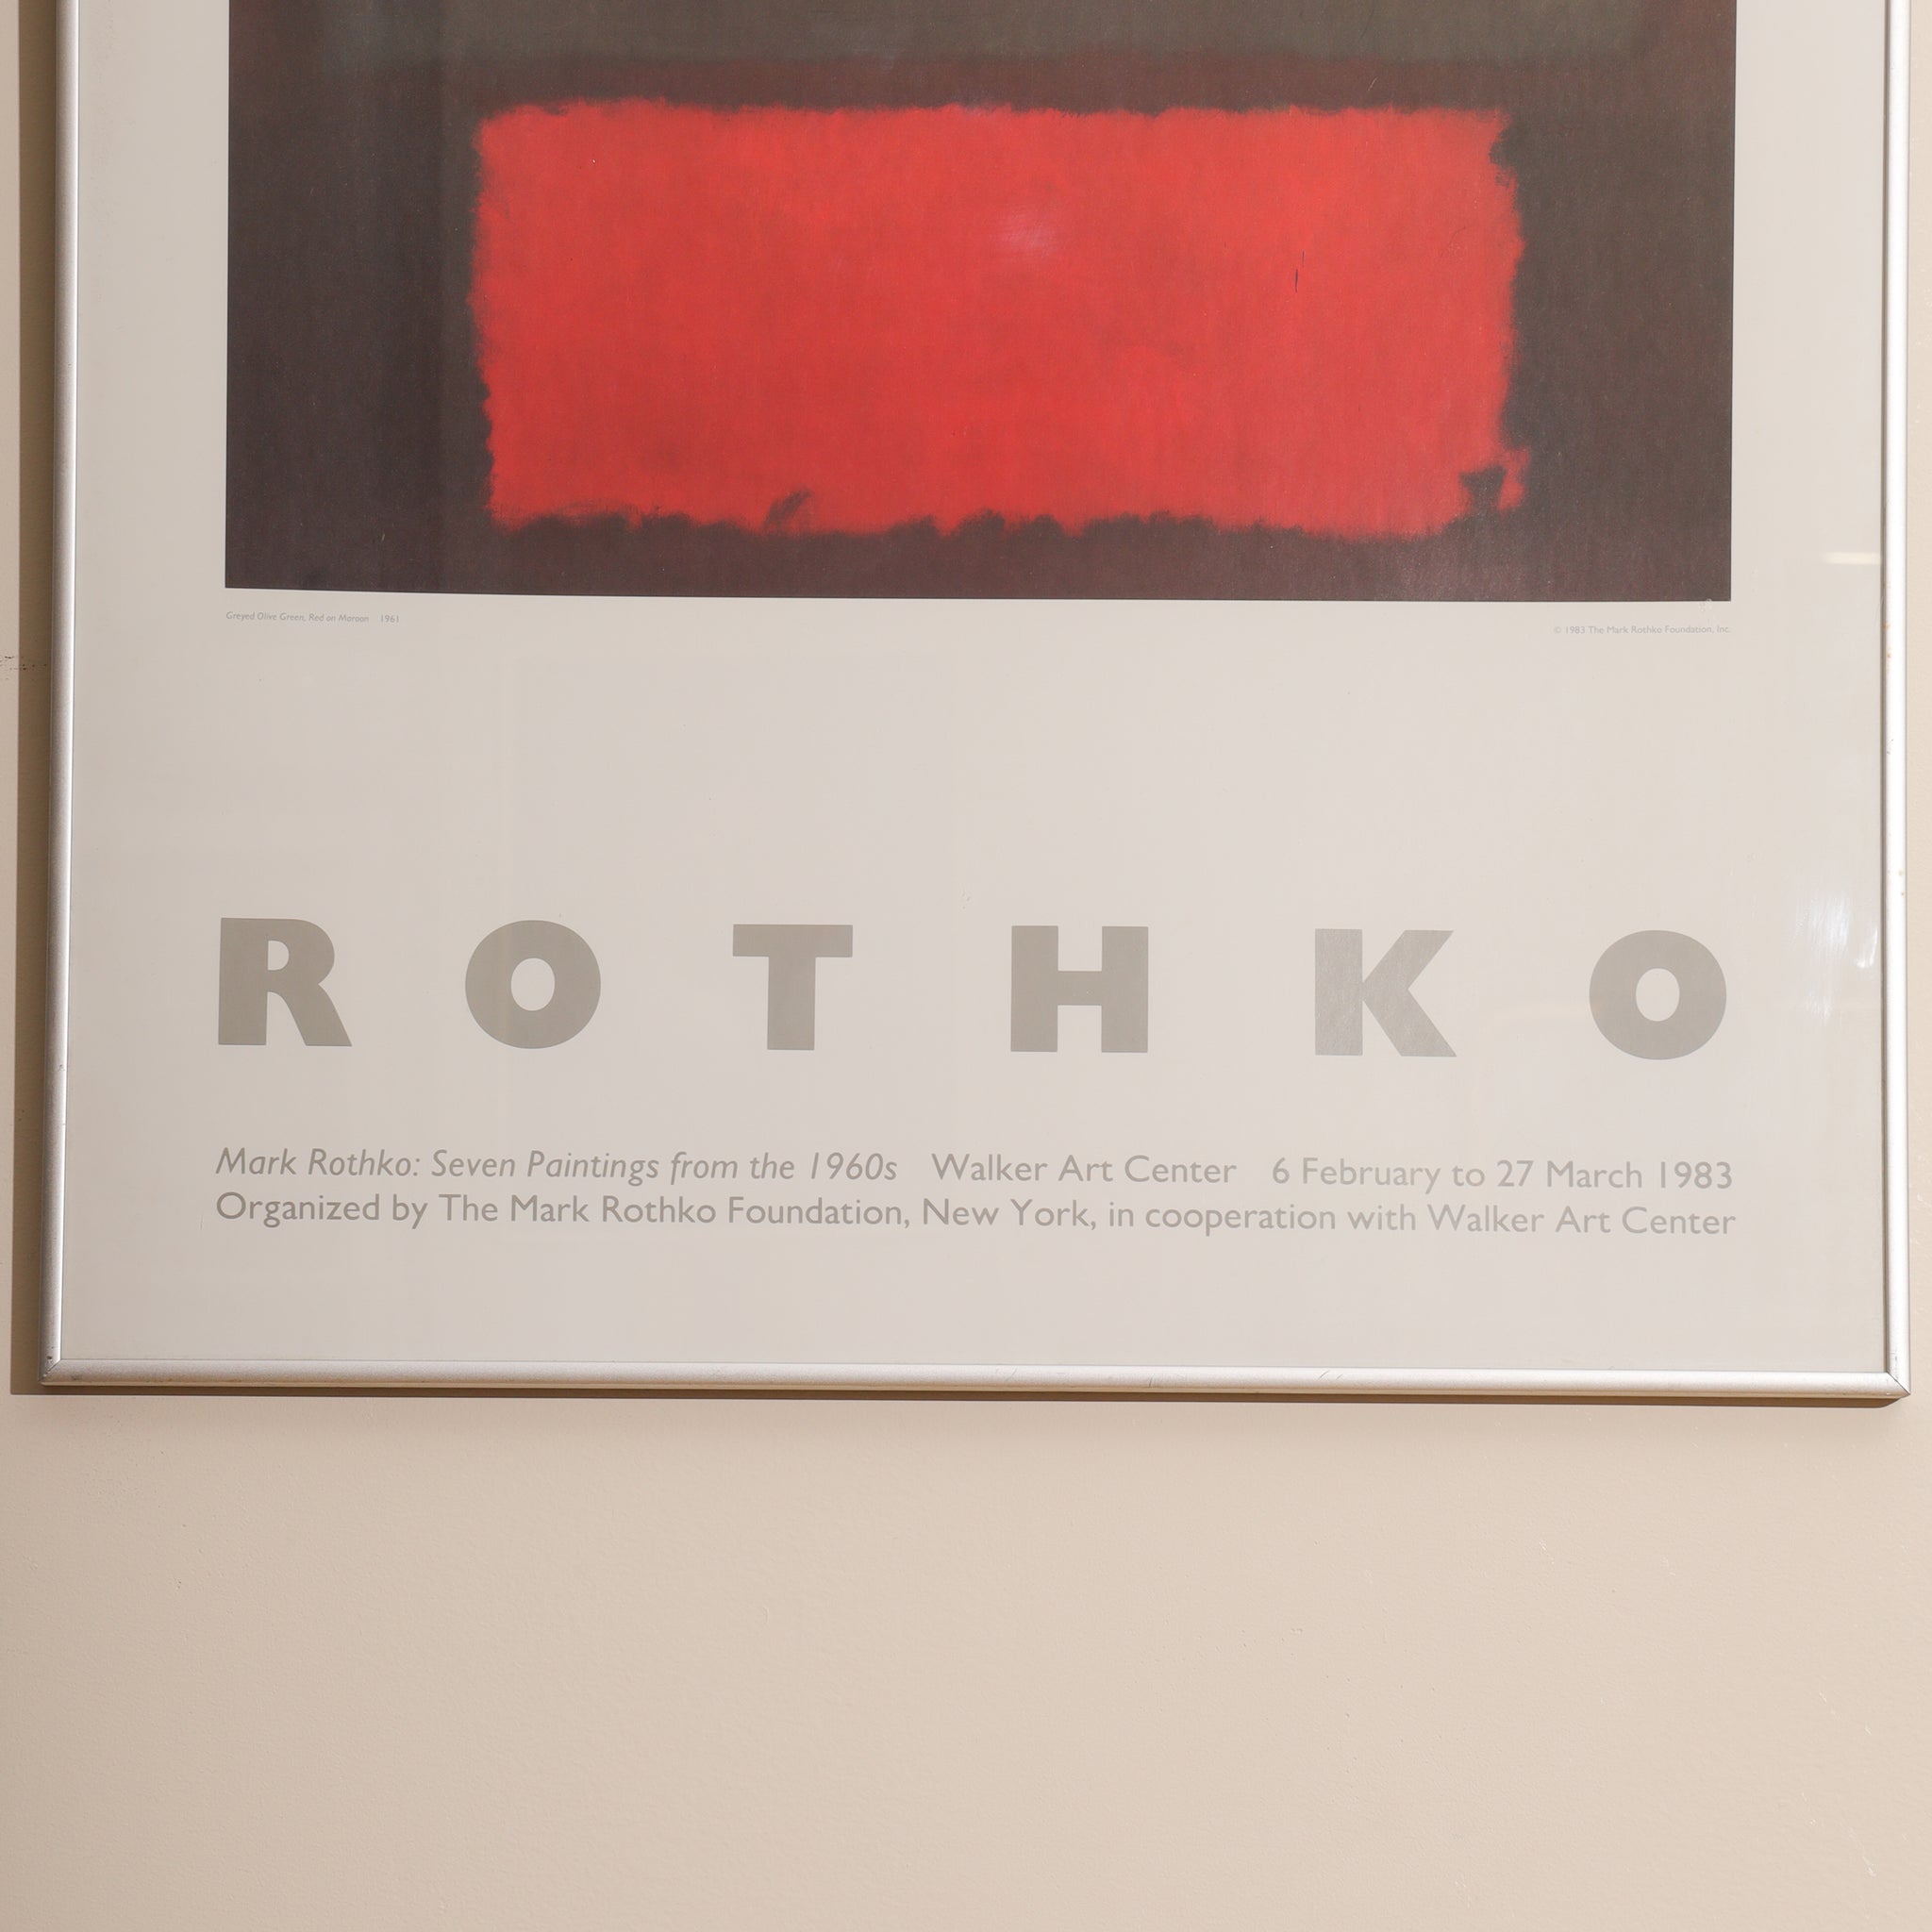 Mark Rothko 'Greyed Olive, Green, Red on Maroon'